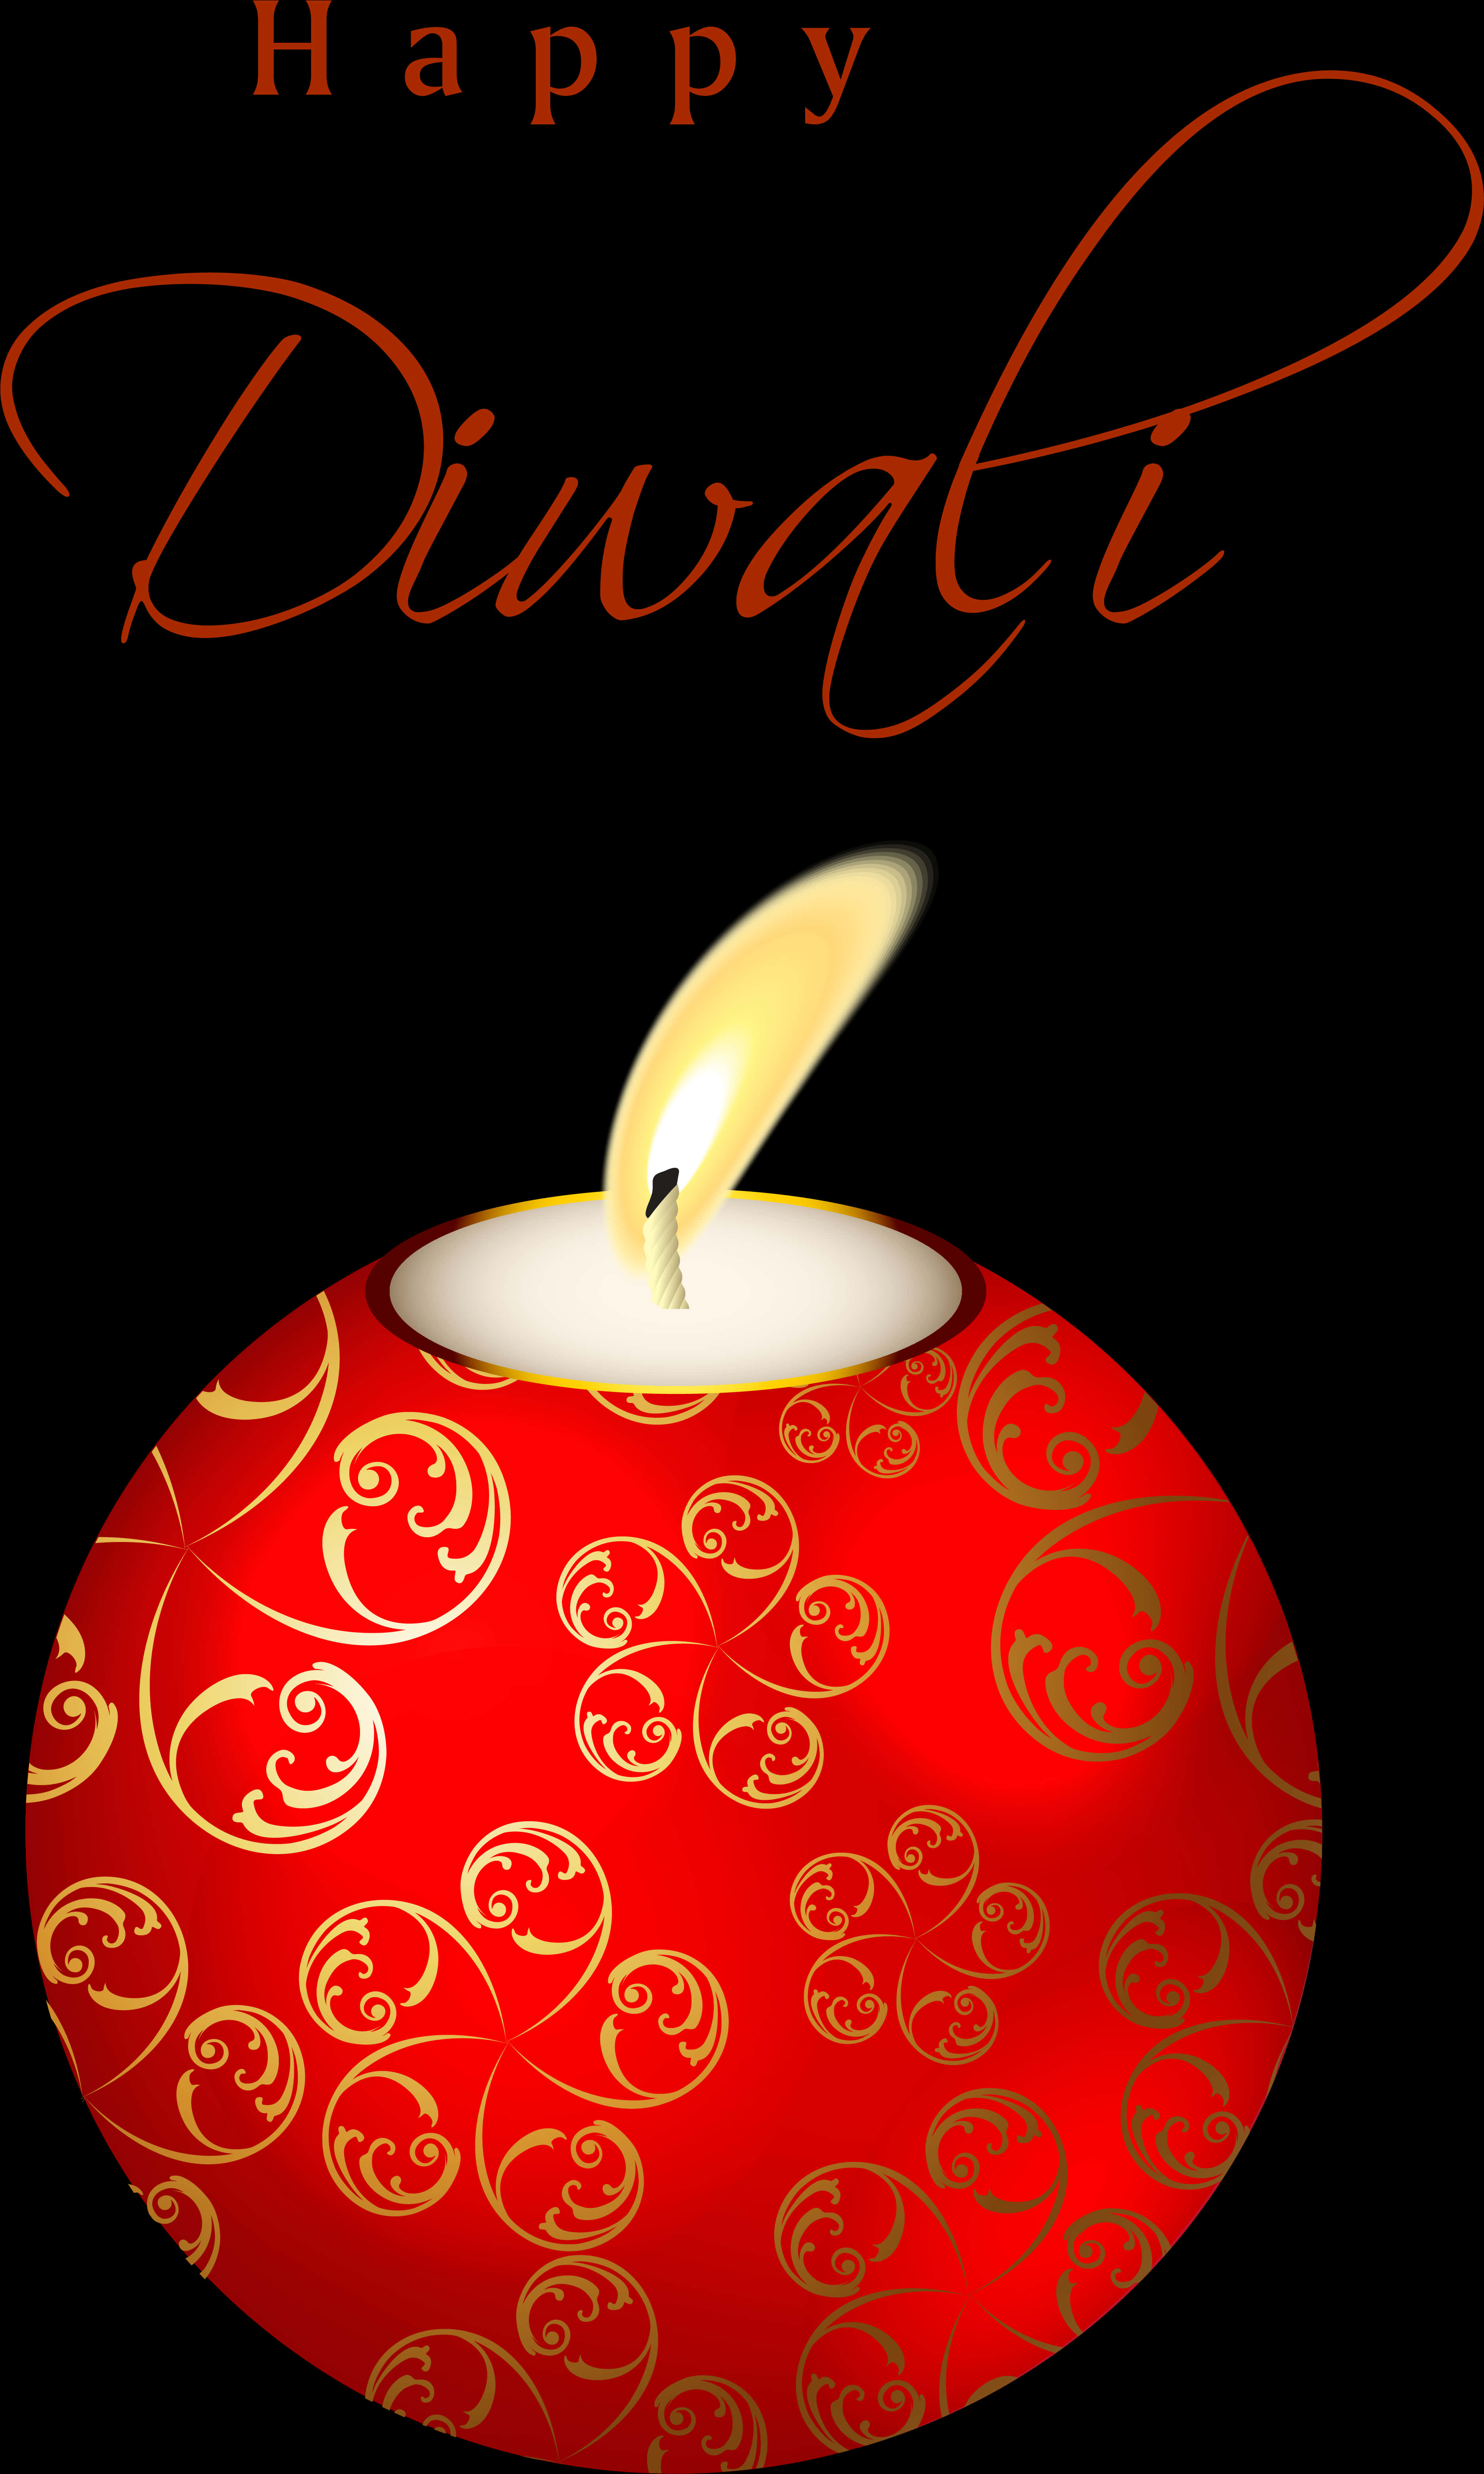 Happy Diwali Candle Greeting